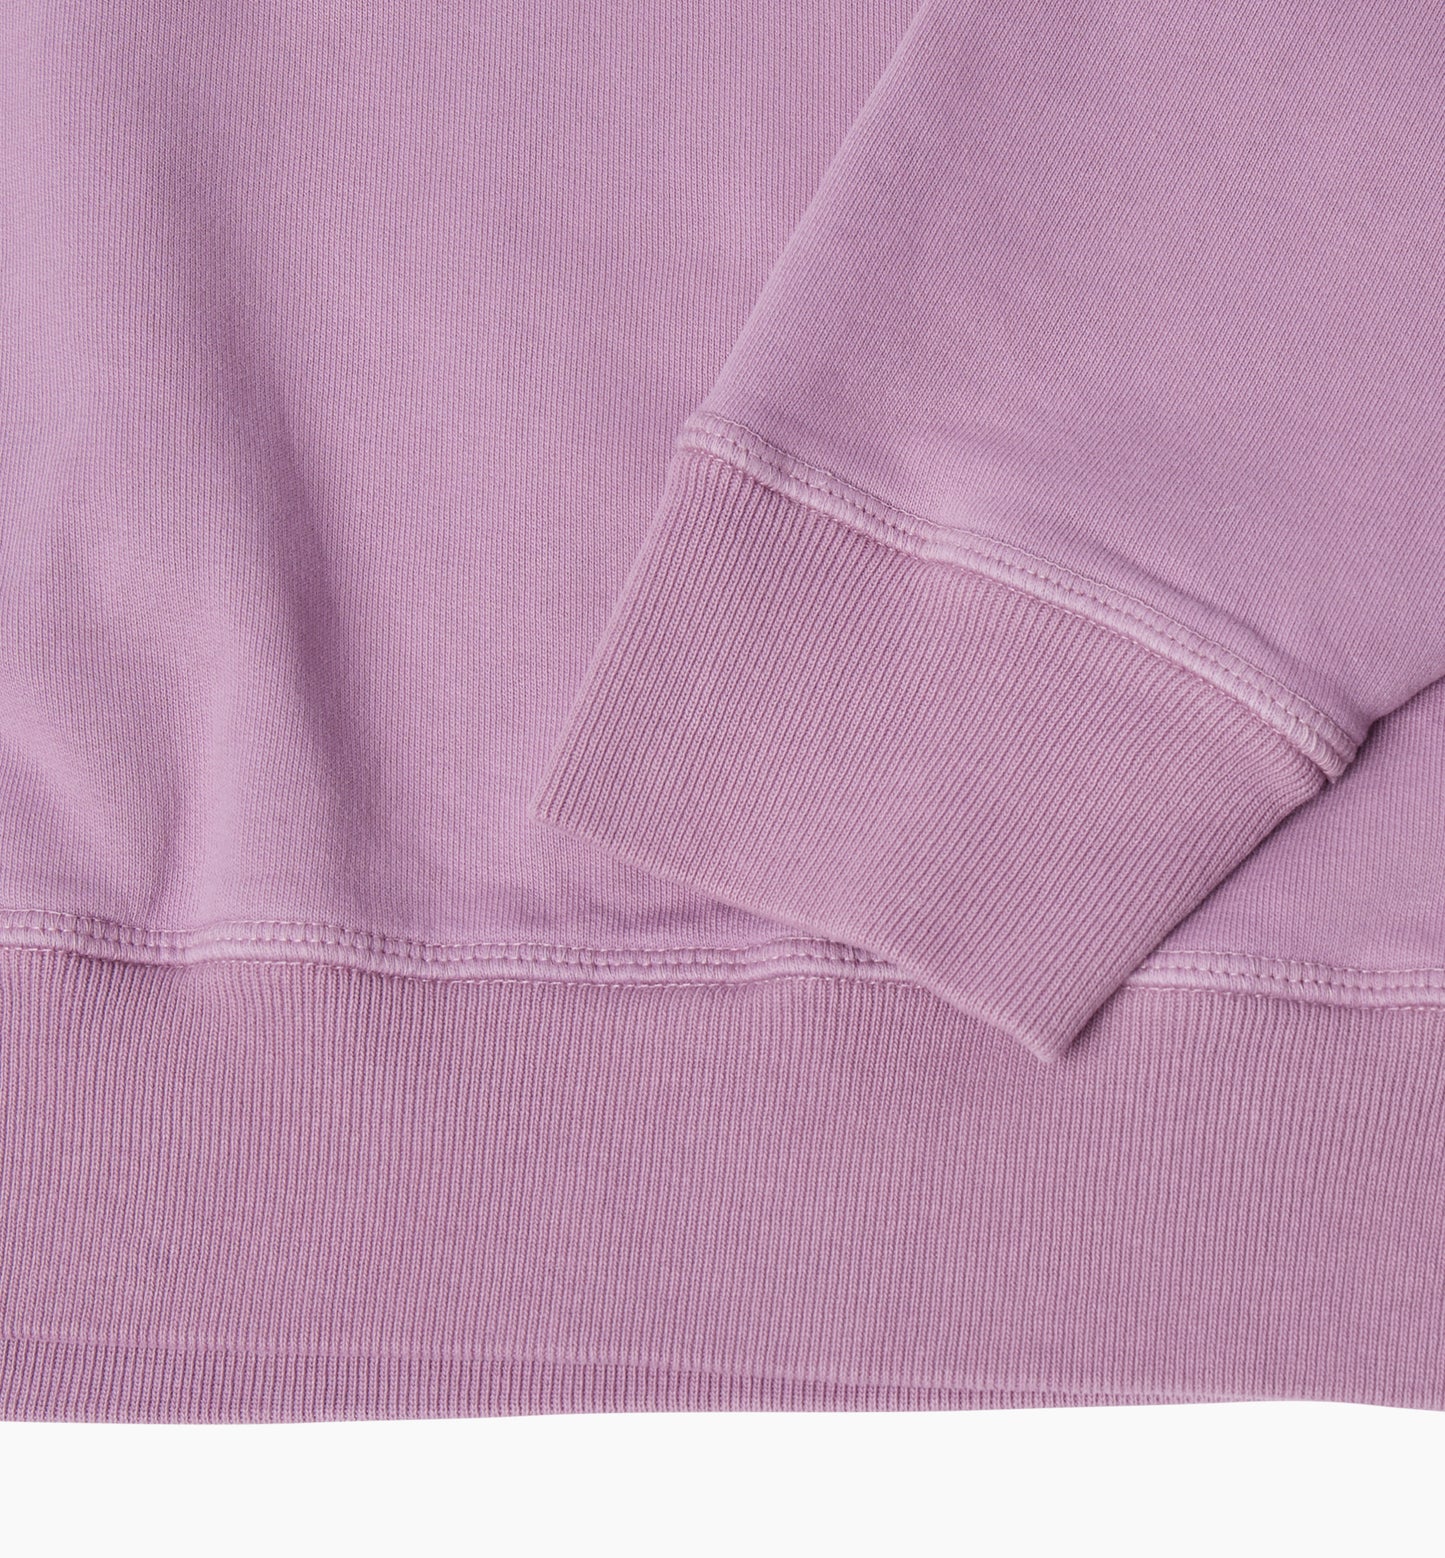 By Parra Logo Crewneck Sweater Lavender